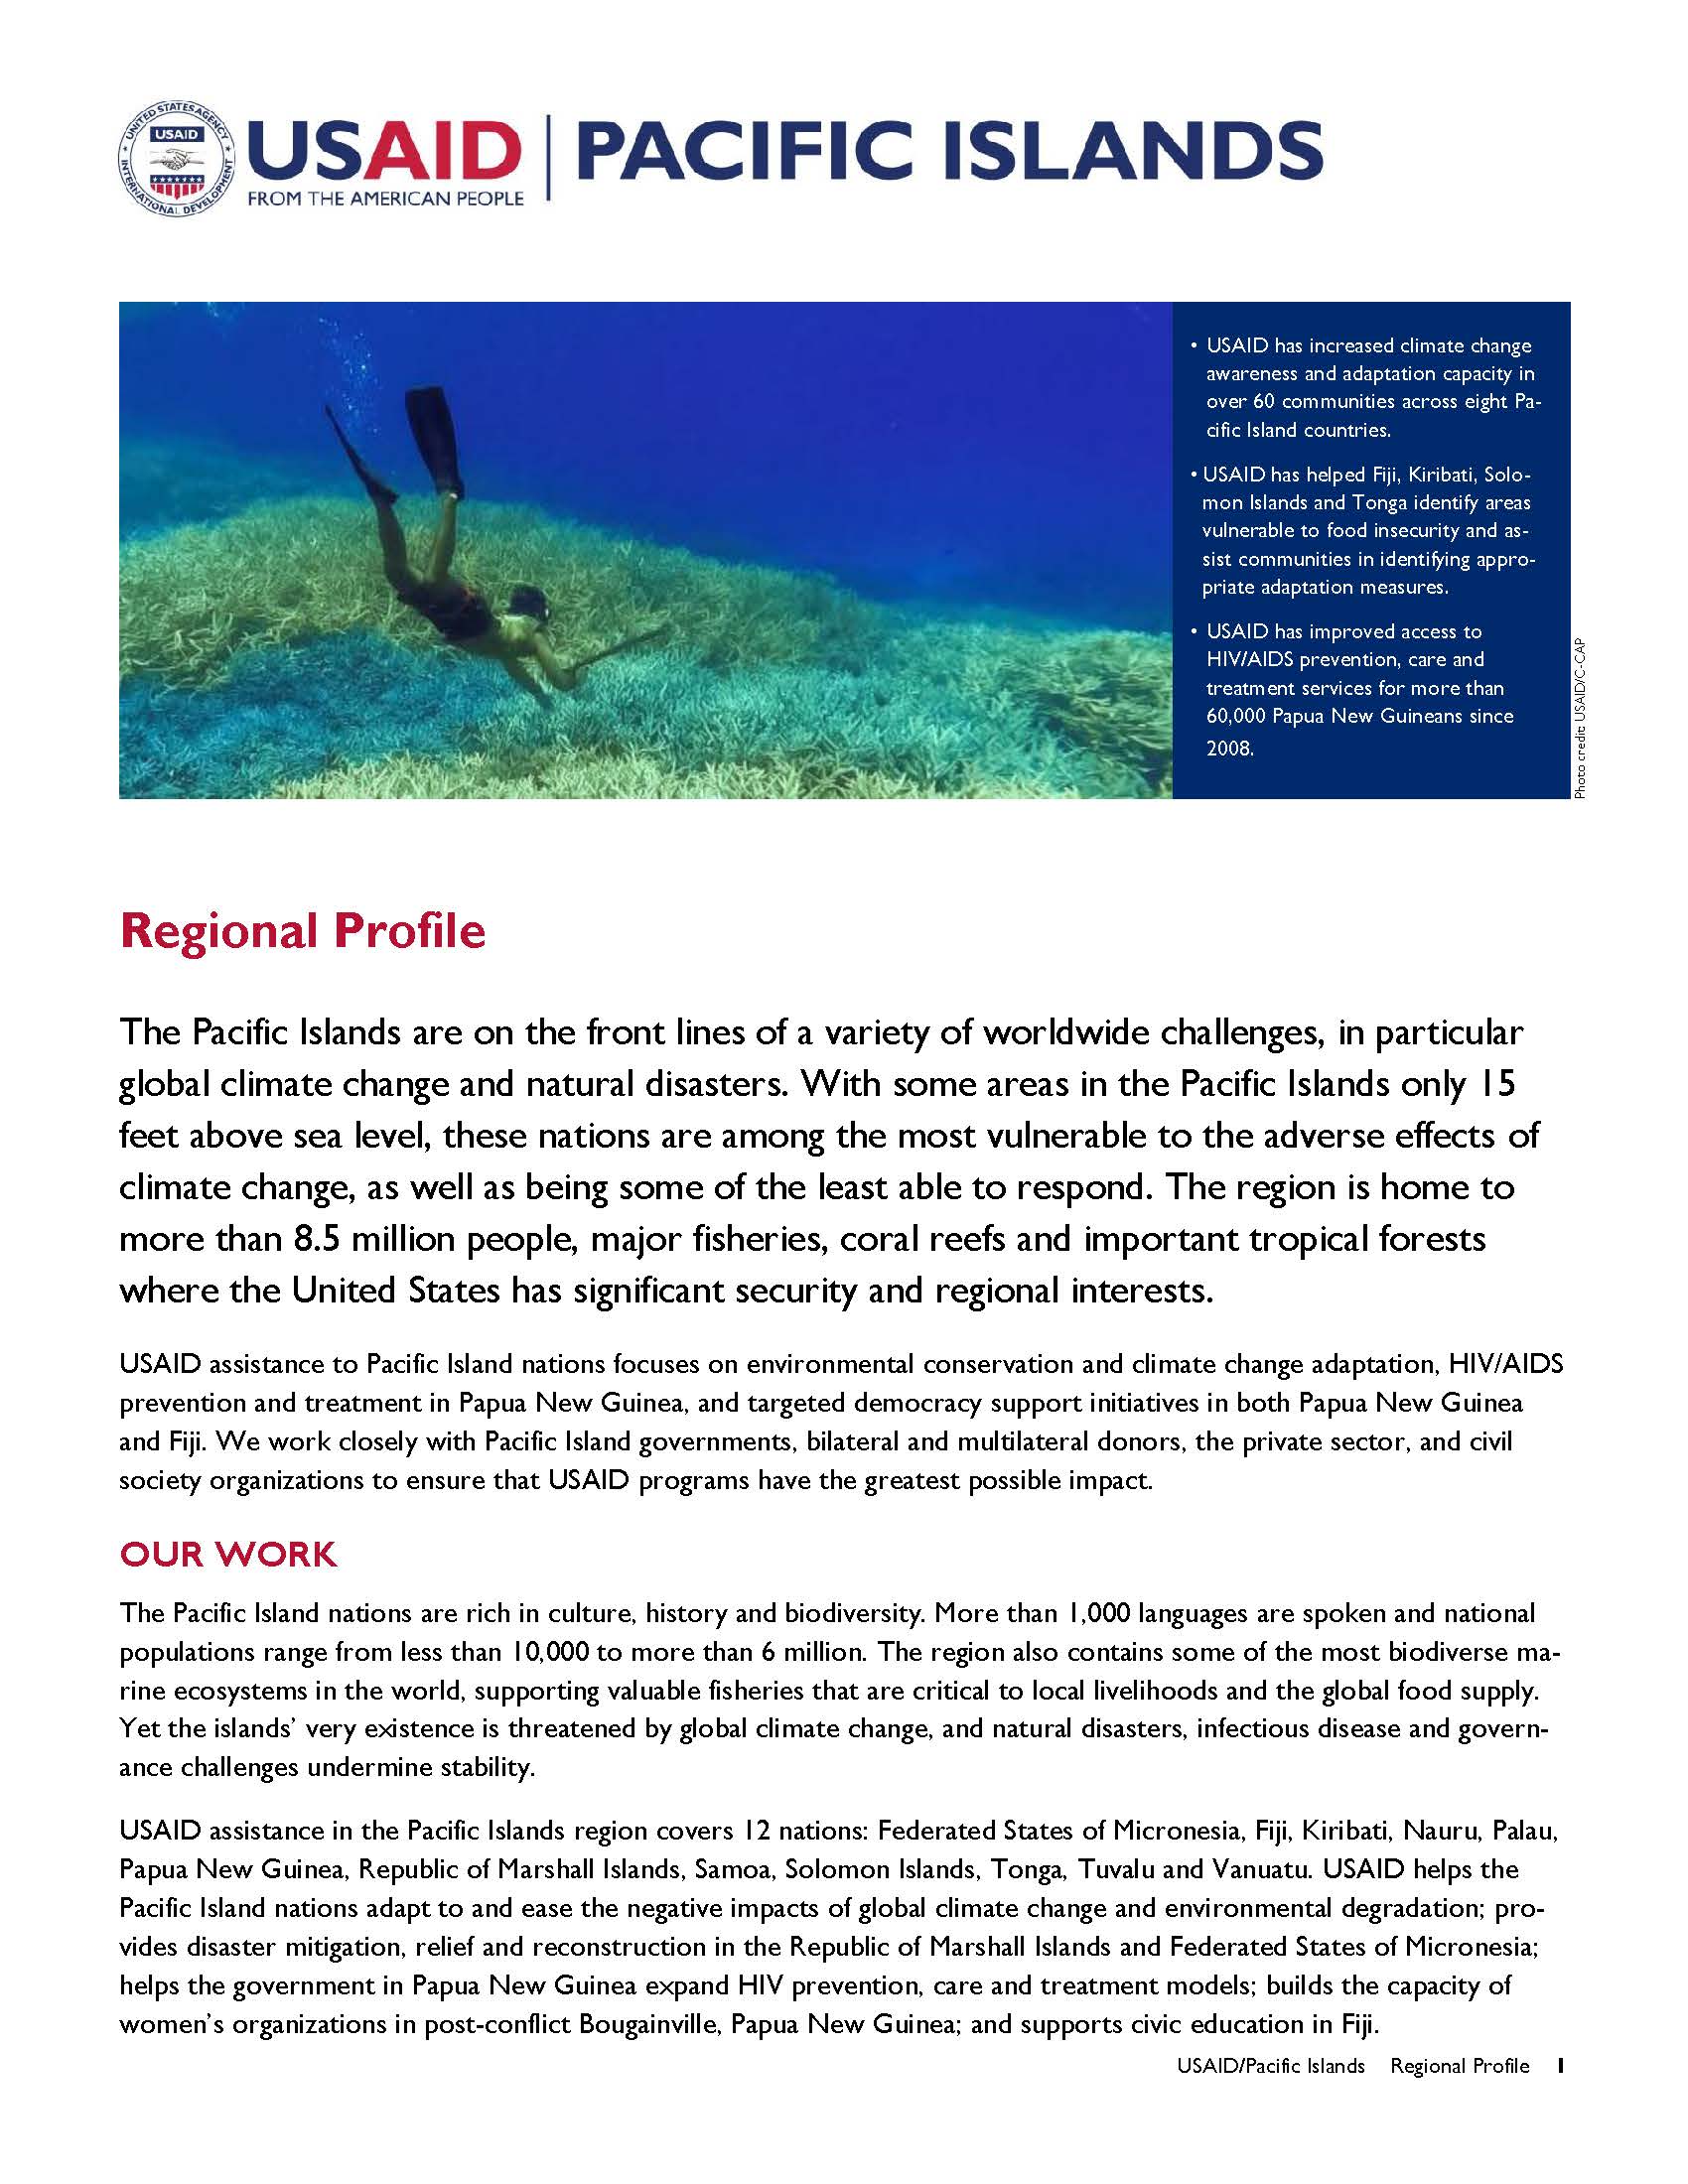 Pacific Islands Regional Profile